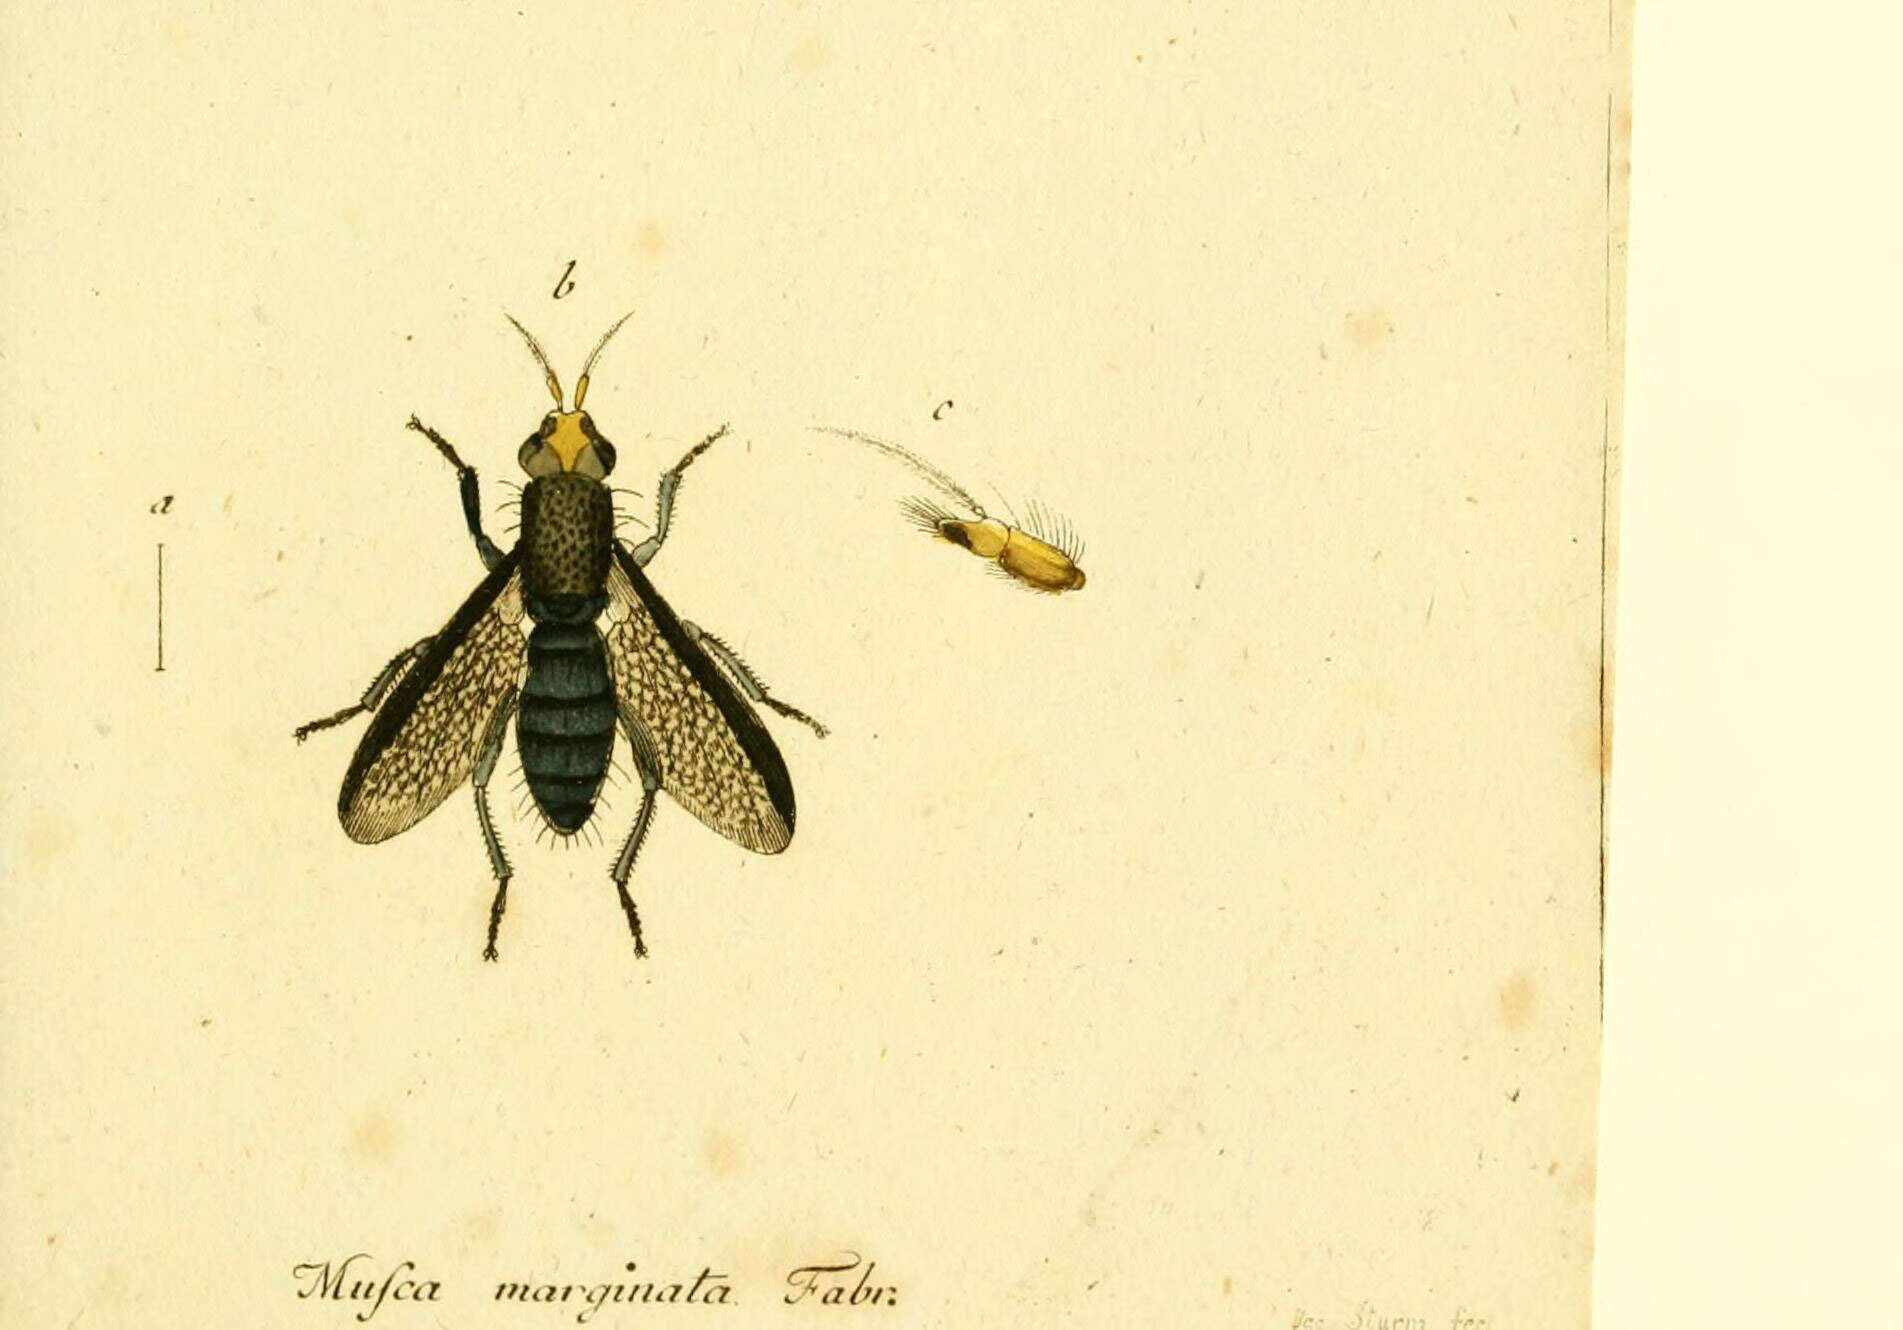 Sivun Coremacera marginata (Fabricius 1775) kuva